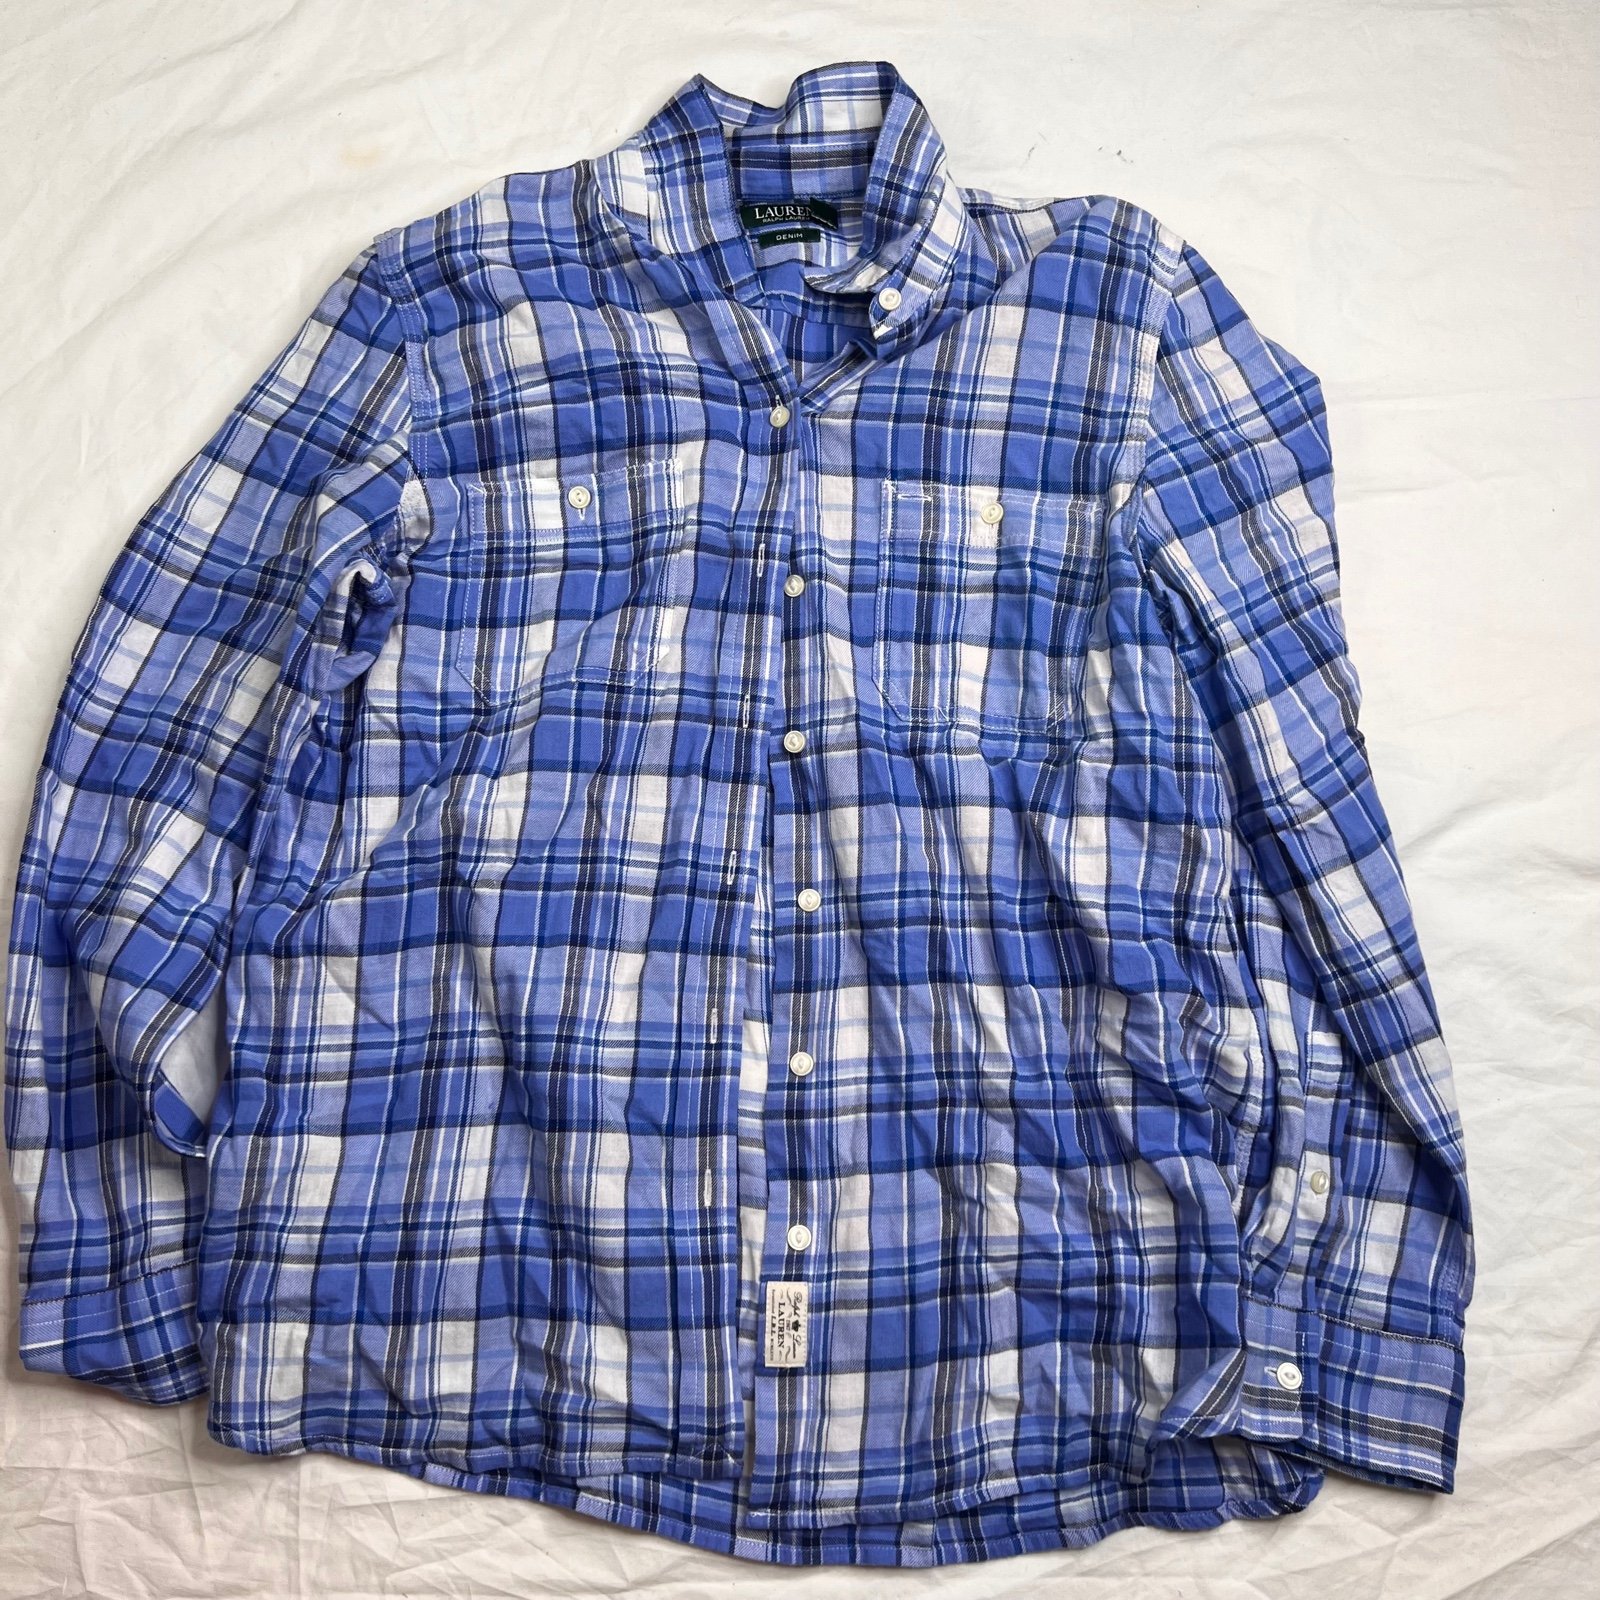 Personality Denim Ralph Lauren shirt Size Large  Blue P